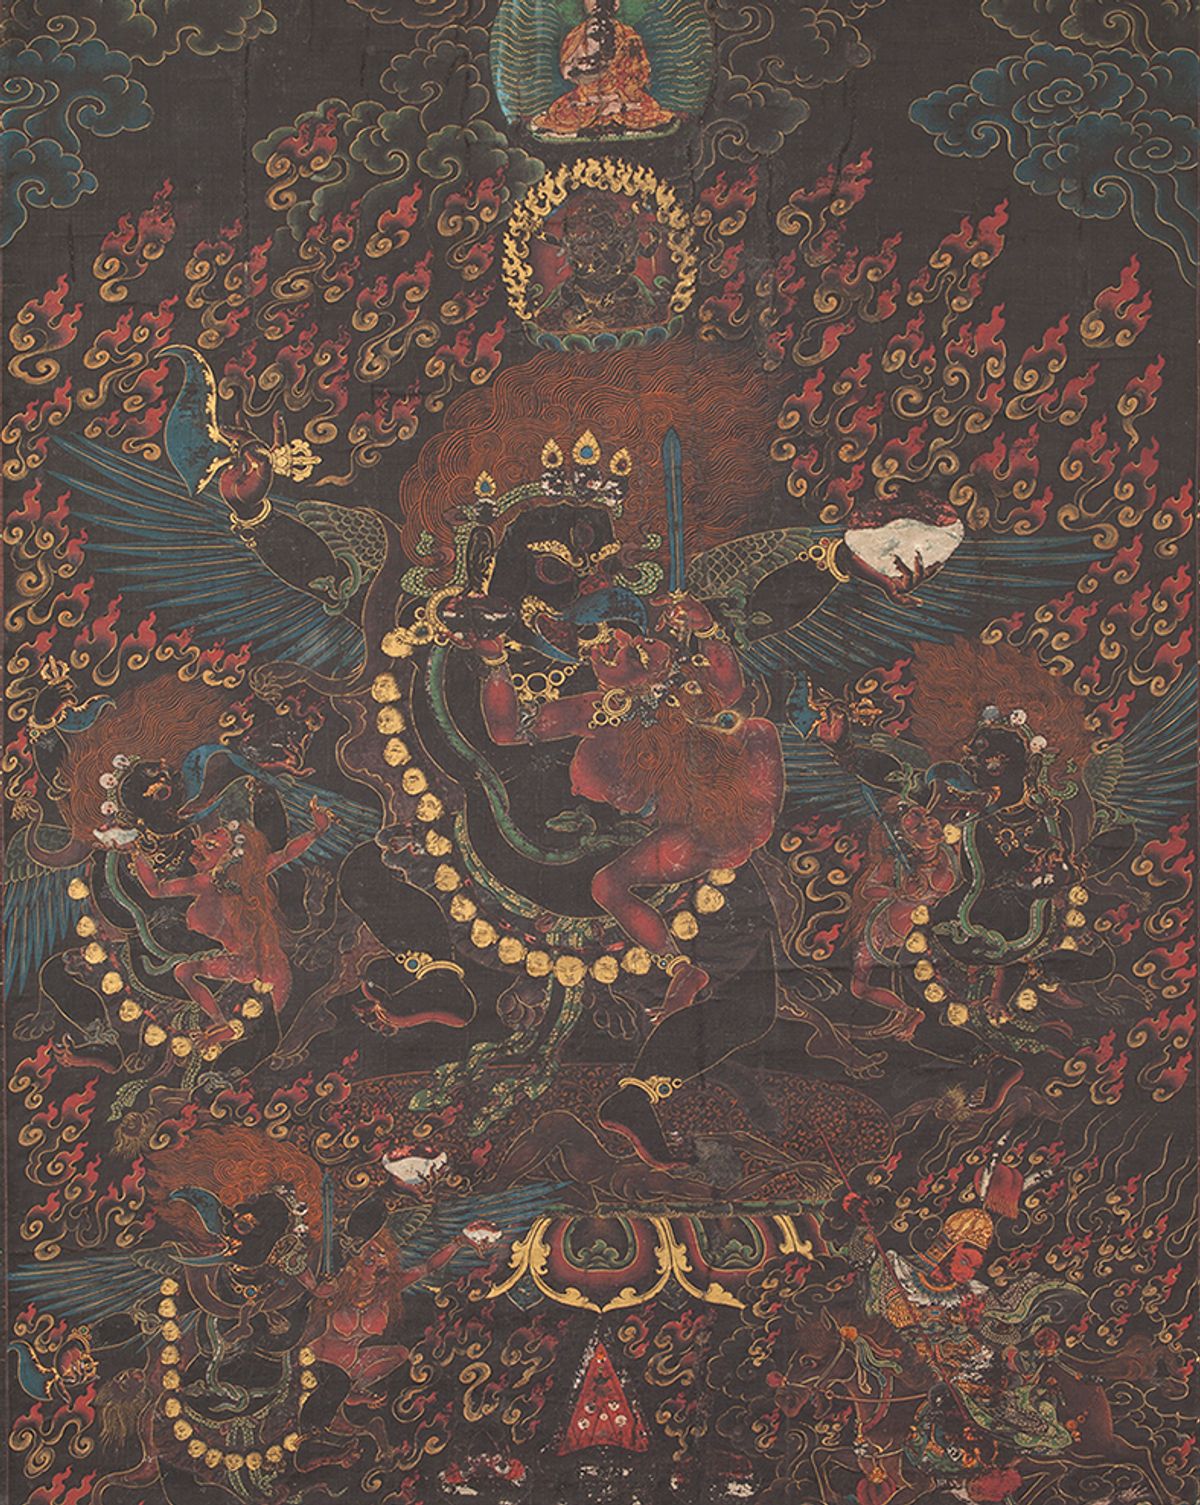 A pigment on cloth Raven-Headed Mahakala from Bhutan (around early-mid 19th century) Rubin  Museum of Art